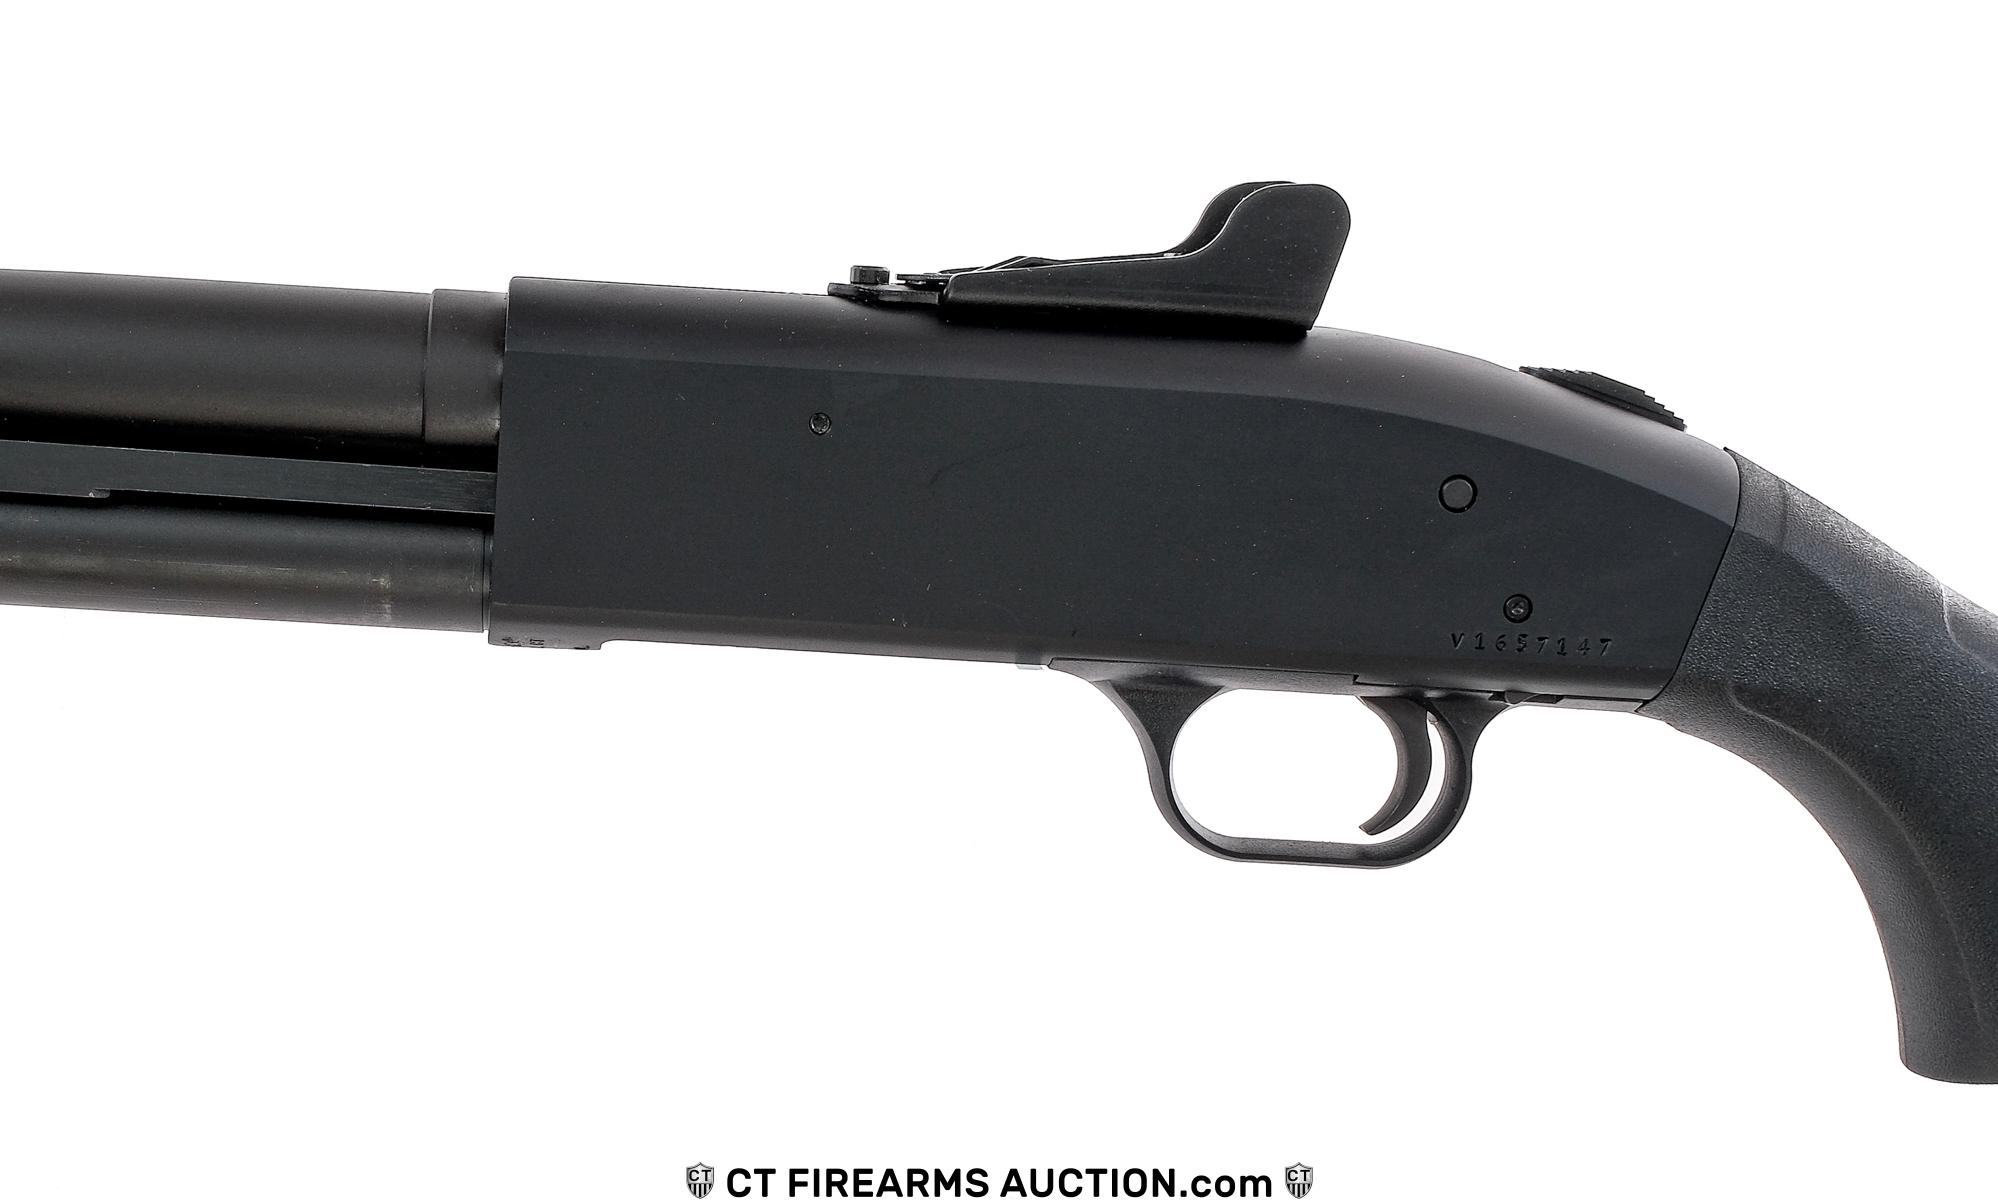 Mossberg 590S 12Ga Pump Action Shotgun